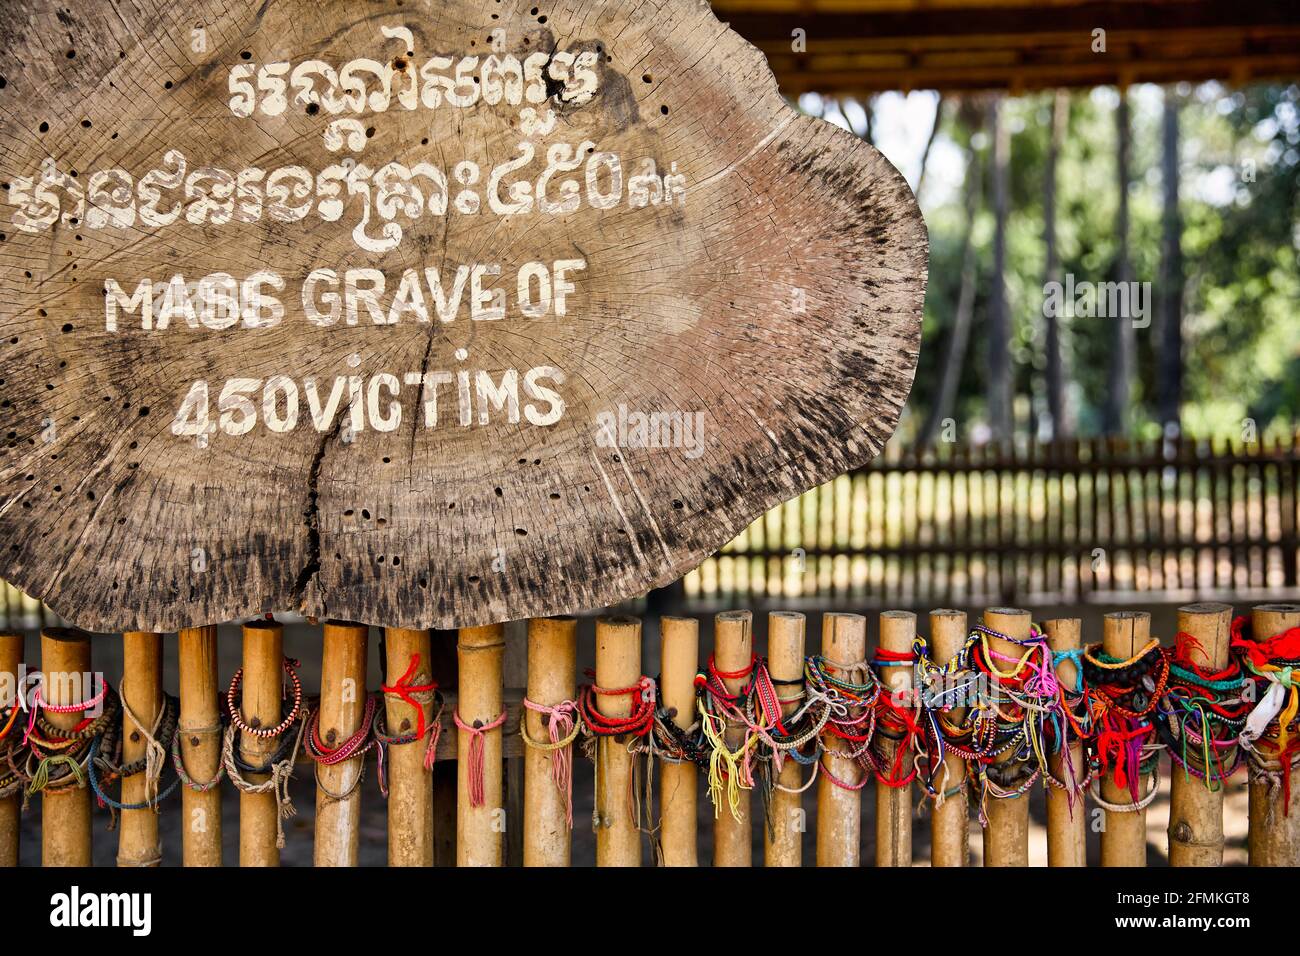 Choeung Ek Killing Fields in Phnom Penh Cambodia. Mass grave of 450 victims Stock Photo